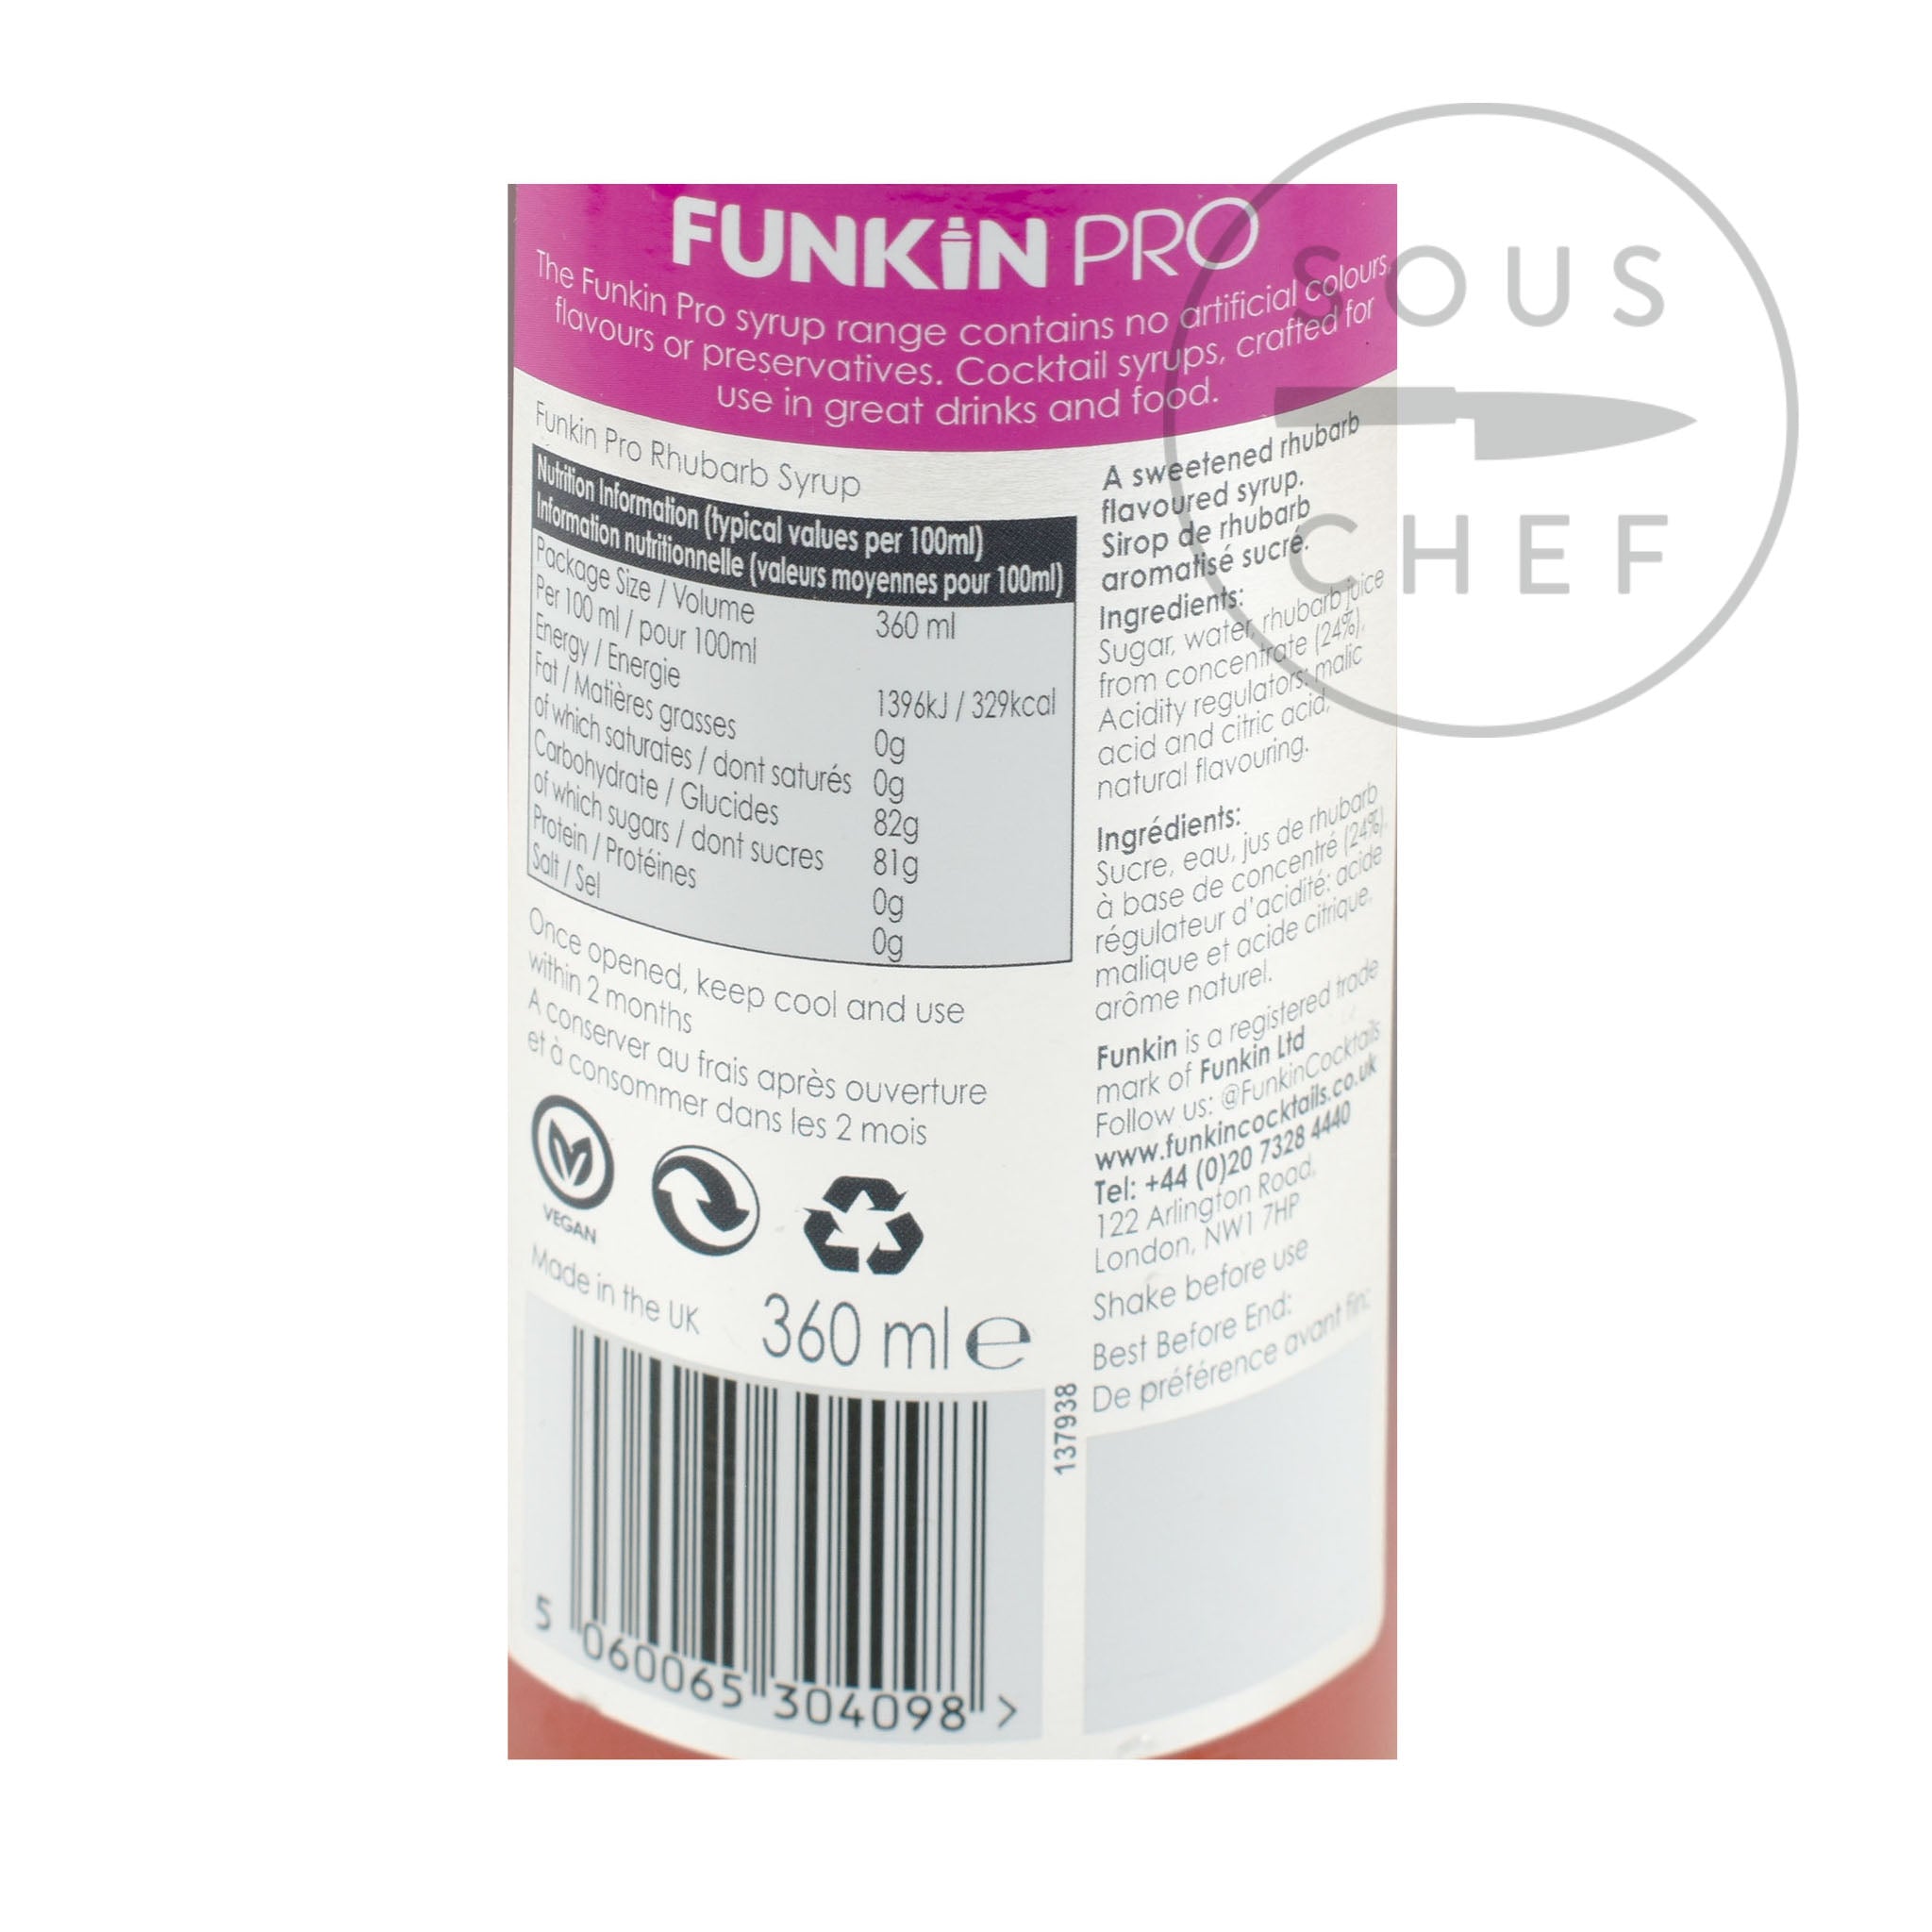 Funkin Rhubarb Syrup 360ml nutritional information ingredients